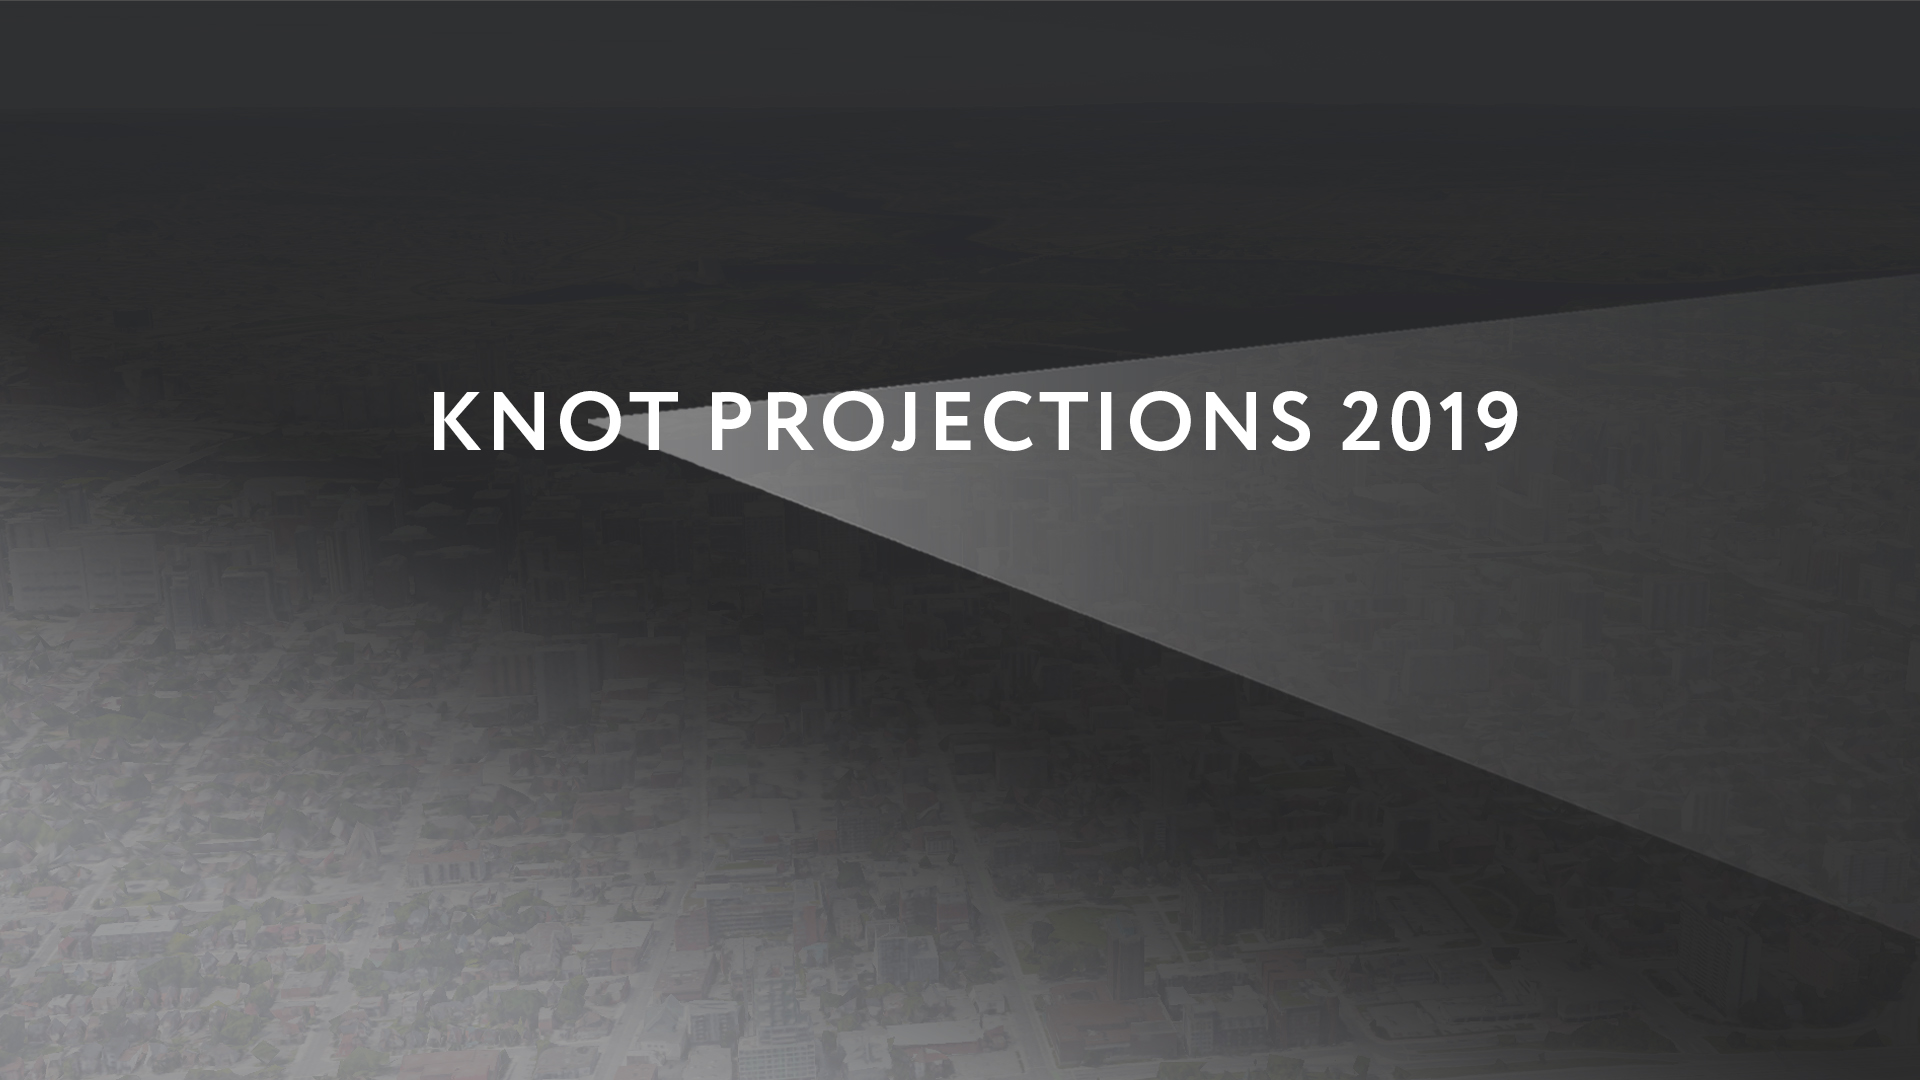 Knot Projections 2019: Imagining Publics